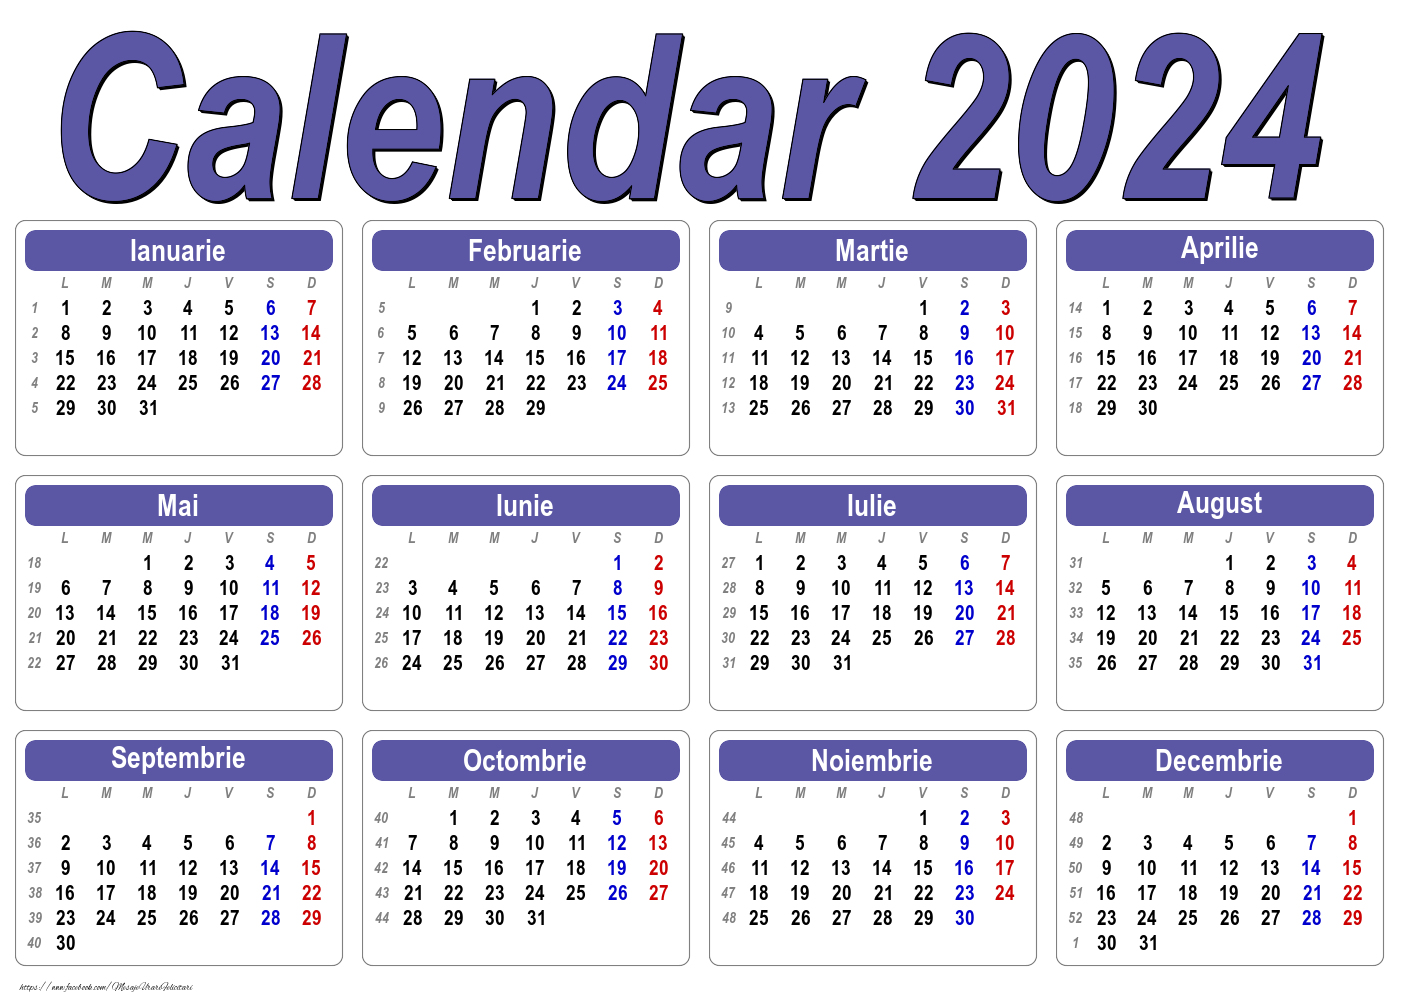 Imagini cu calendare - Calendar 2024 - Clasic - Model 00105 - mesajeurarifelicitari.com